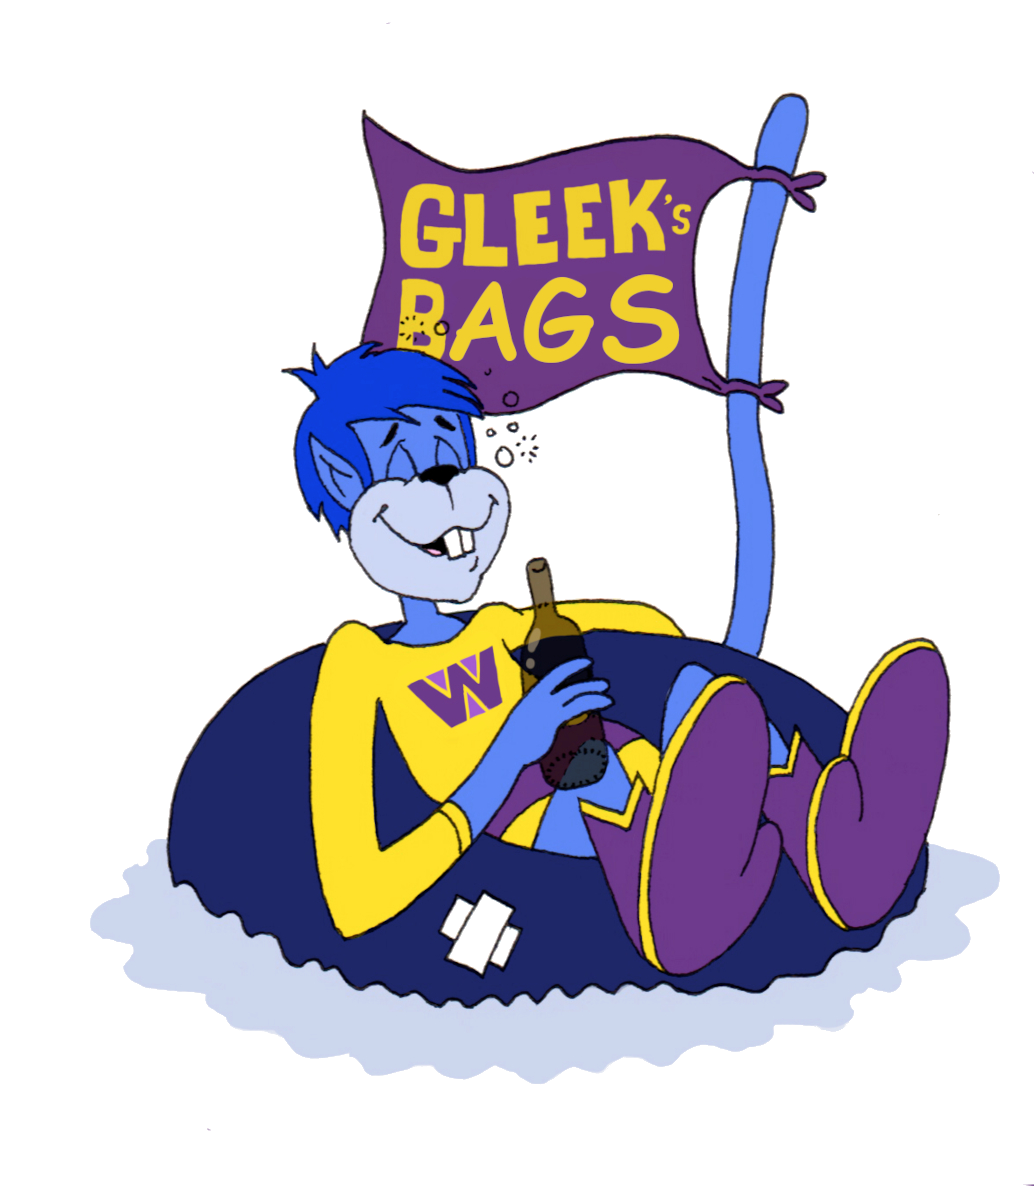 Gleeks Bags logo